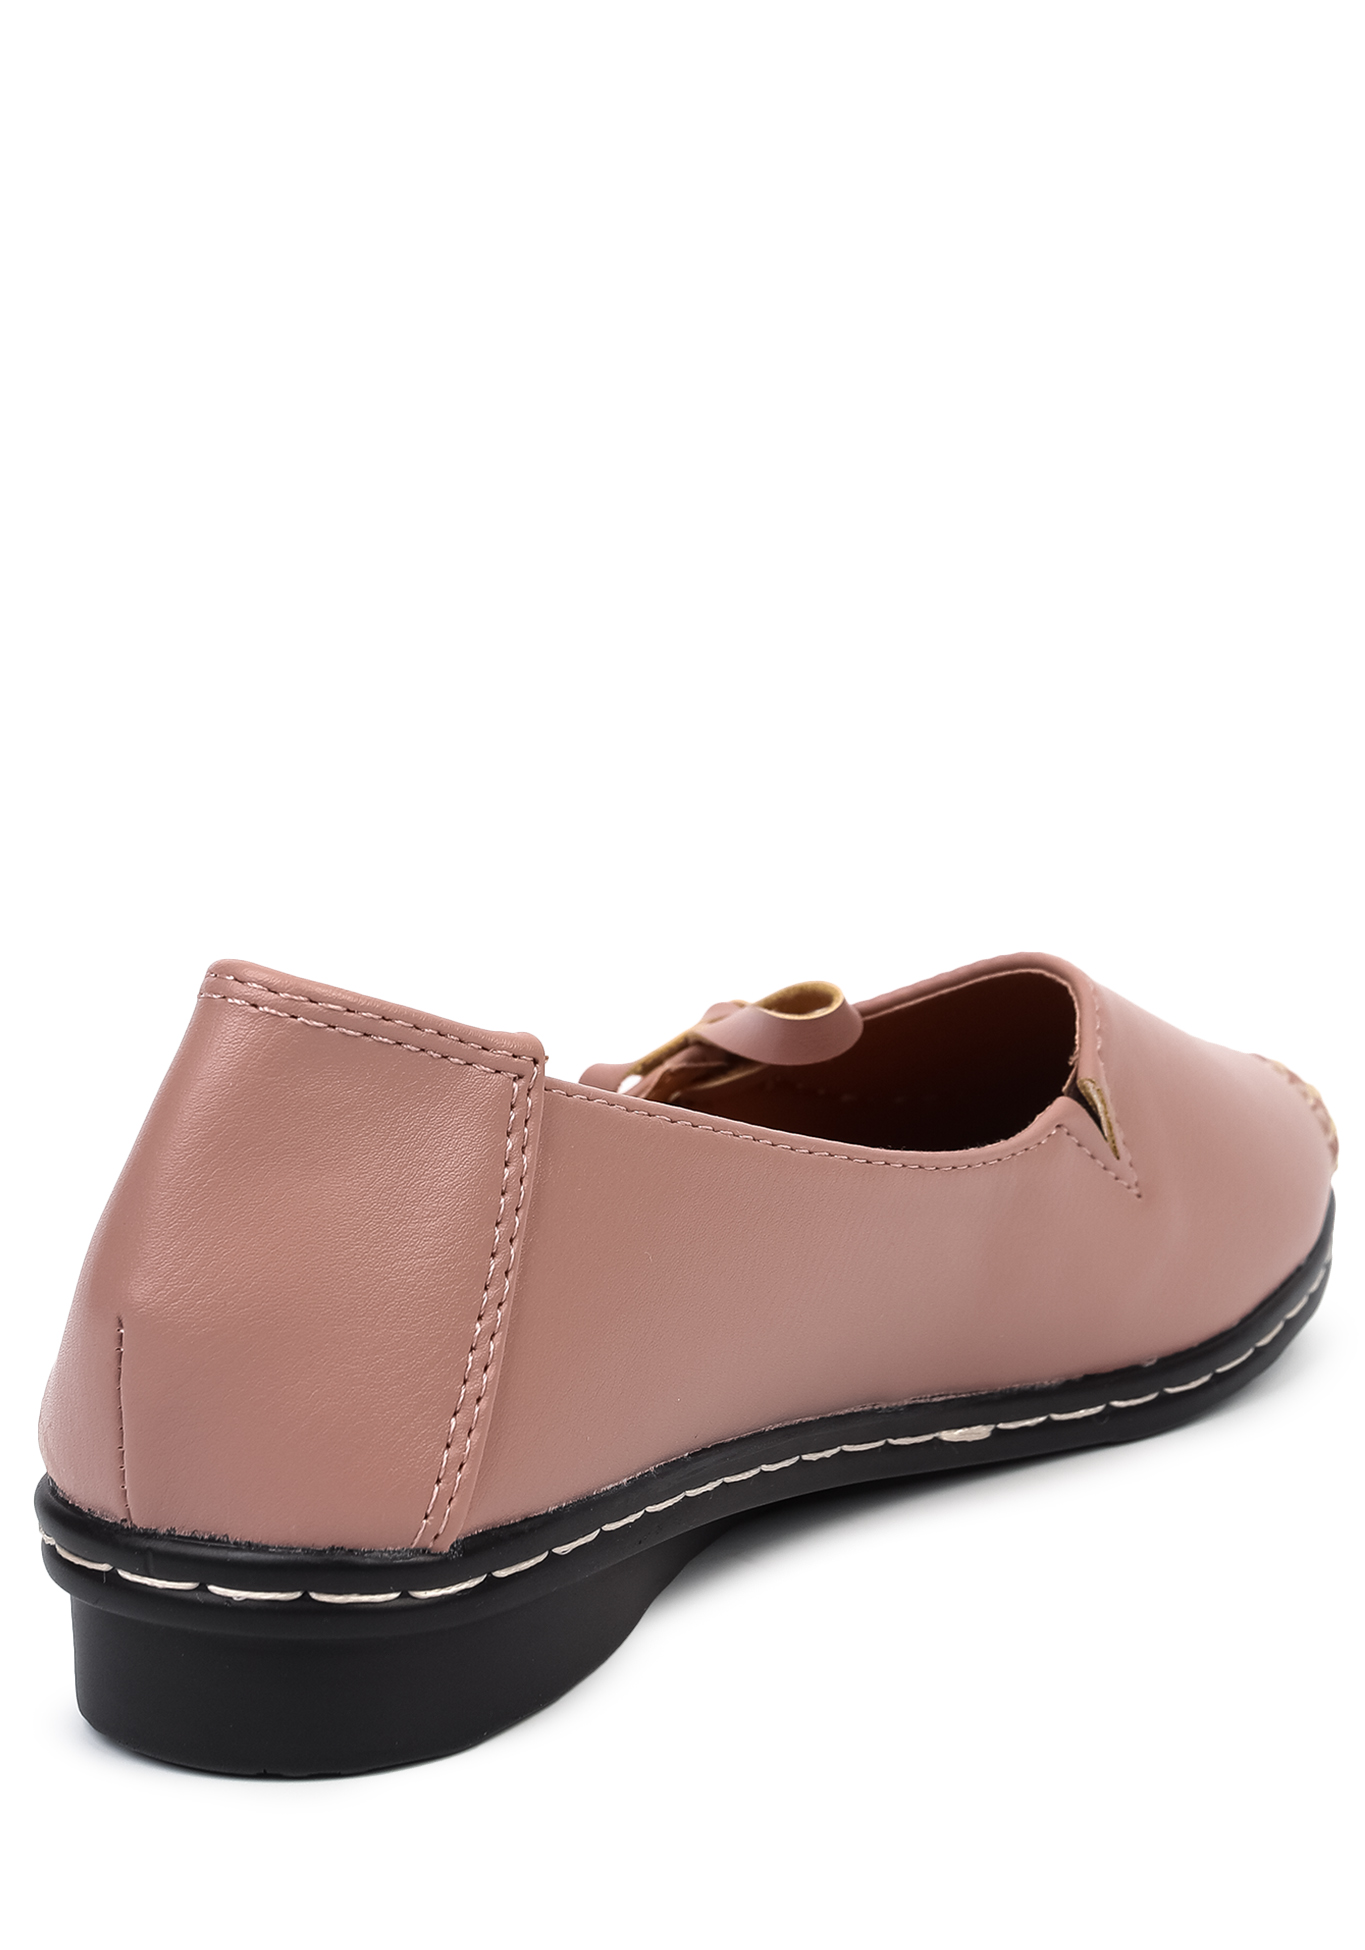 Туфли летние женские "Рикки" ANISA, размер 36, цвет бежевый - фото 7